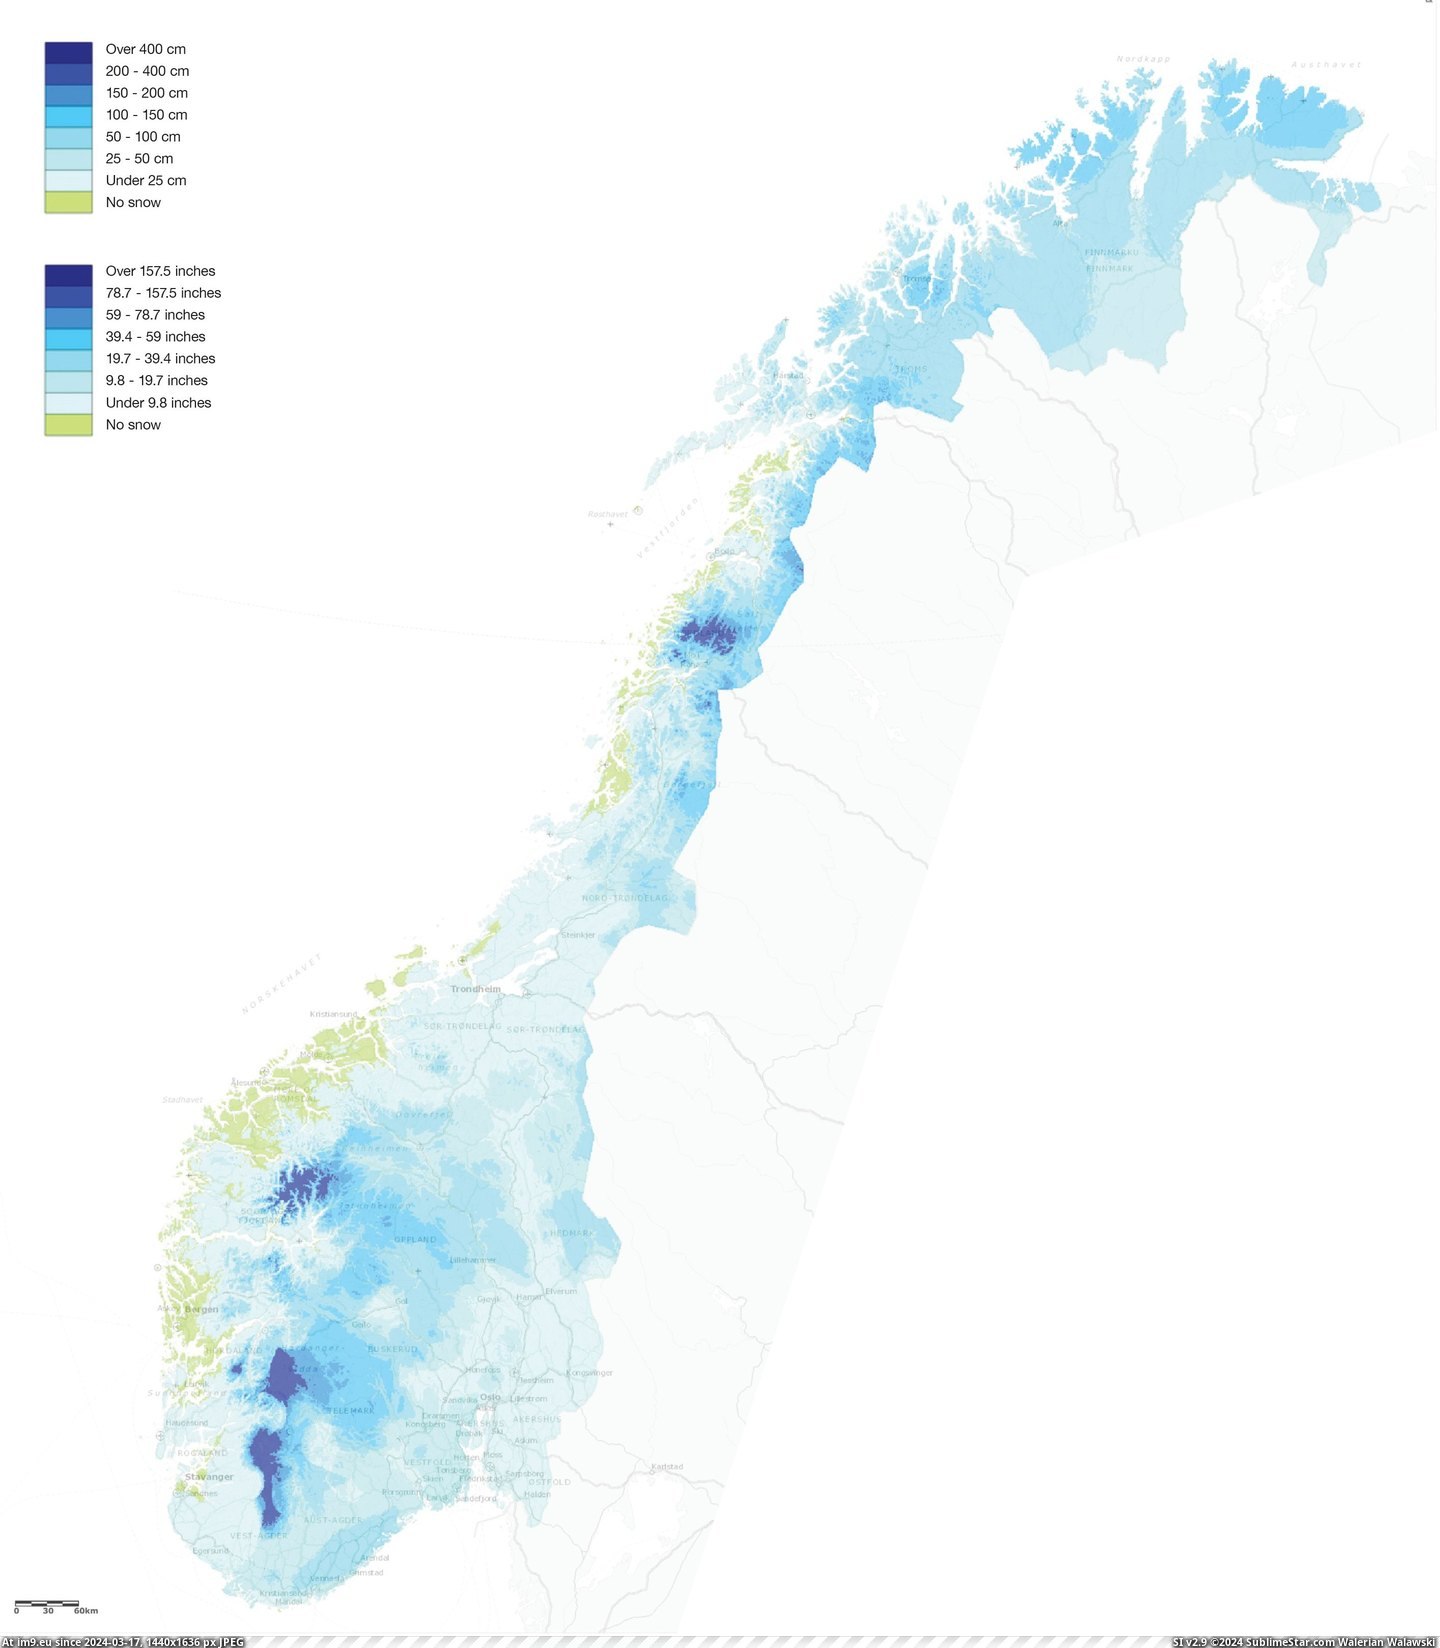 #Snow #Current #Depth #Norway [Dataisbeautiful] Current snow depth in Norway Pic. (Изображение из альбом My r/DATAISBEAUTIFUL favs))